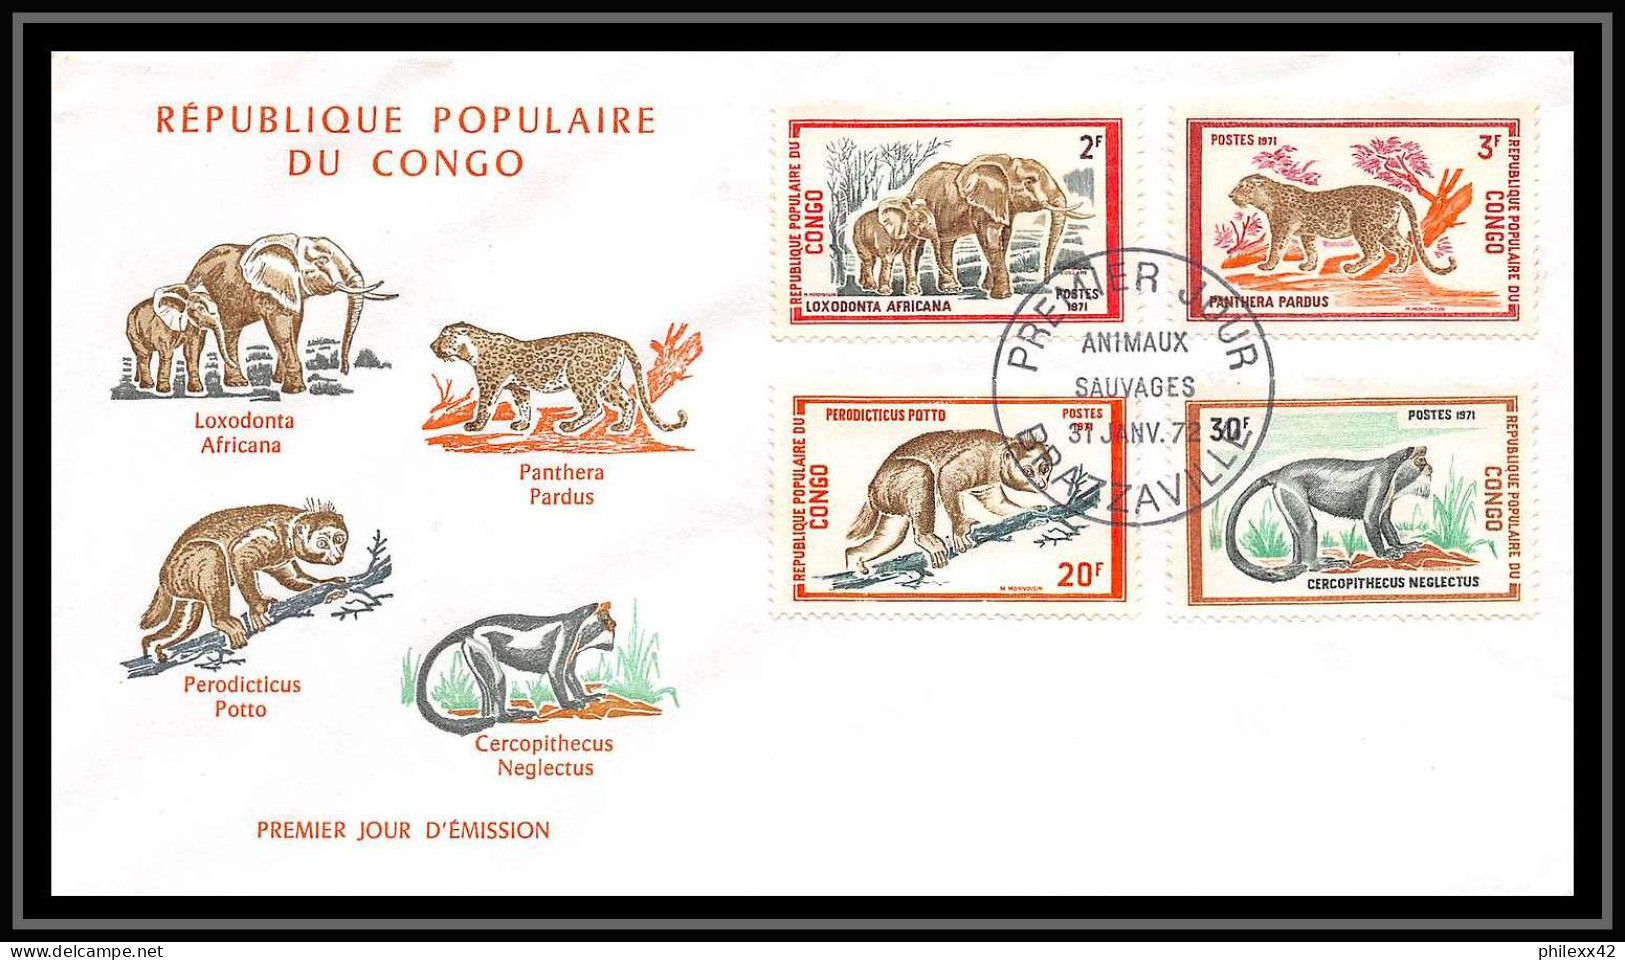 0978 épreuve de luxe deluxe proof Congo 318/325 animals non dentelé imperf ** MNH FDC lion elephant gorilla hippopotamus